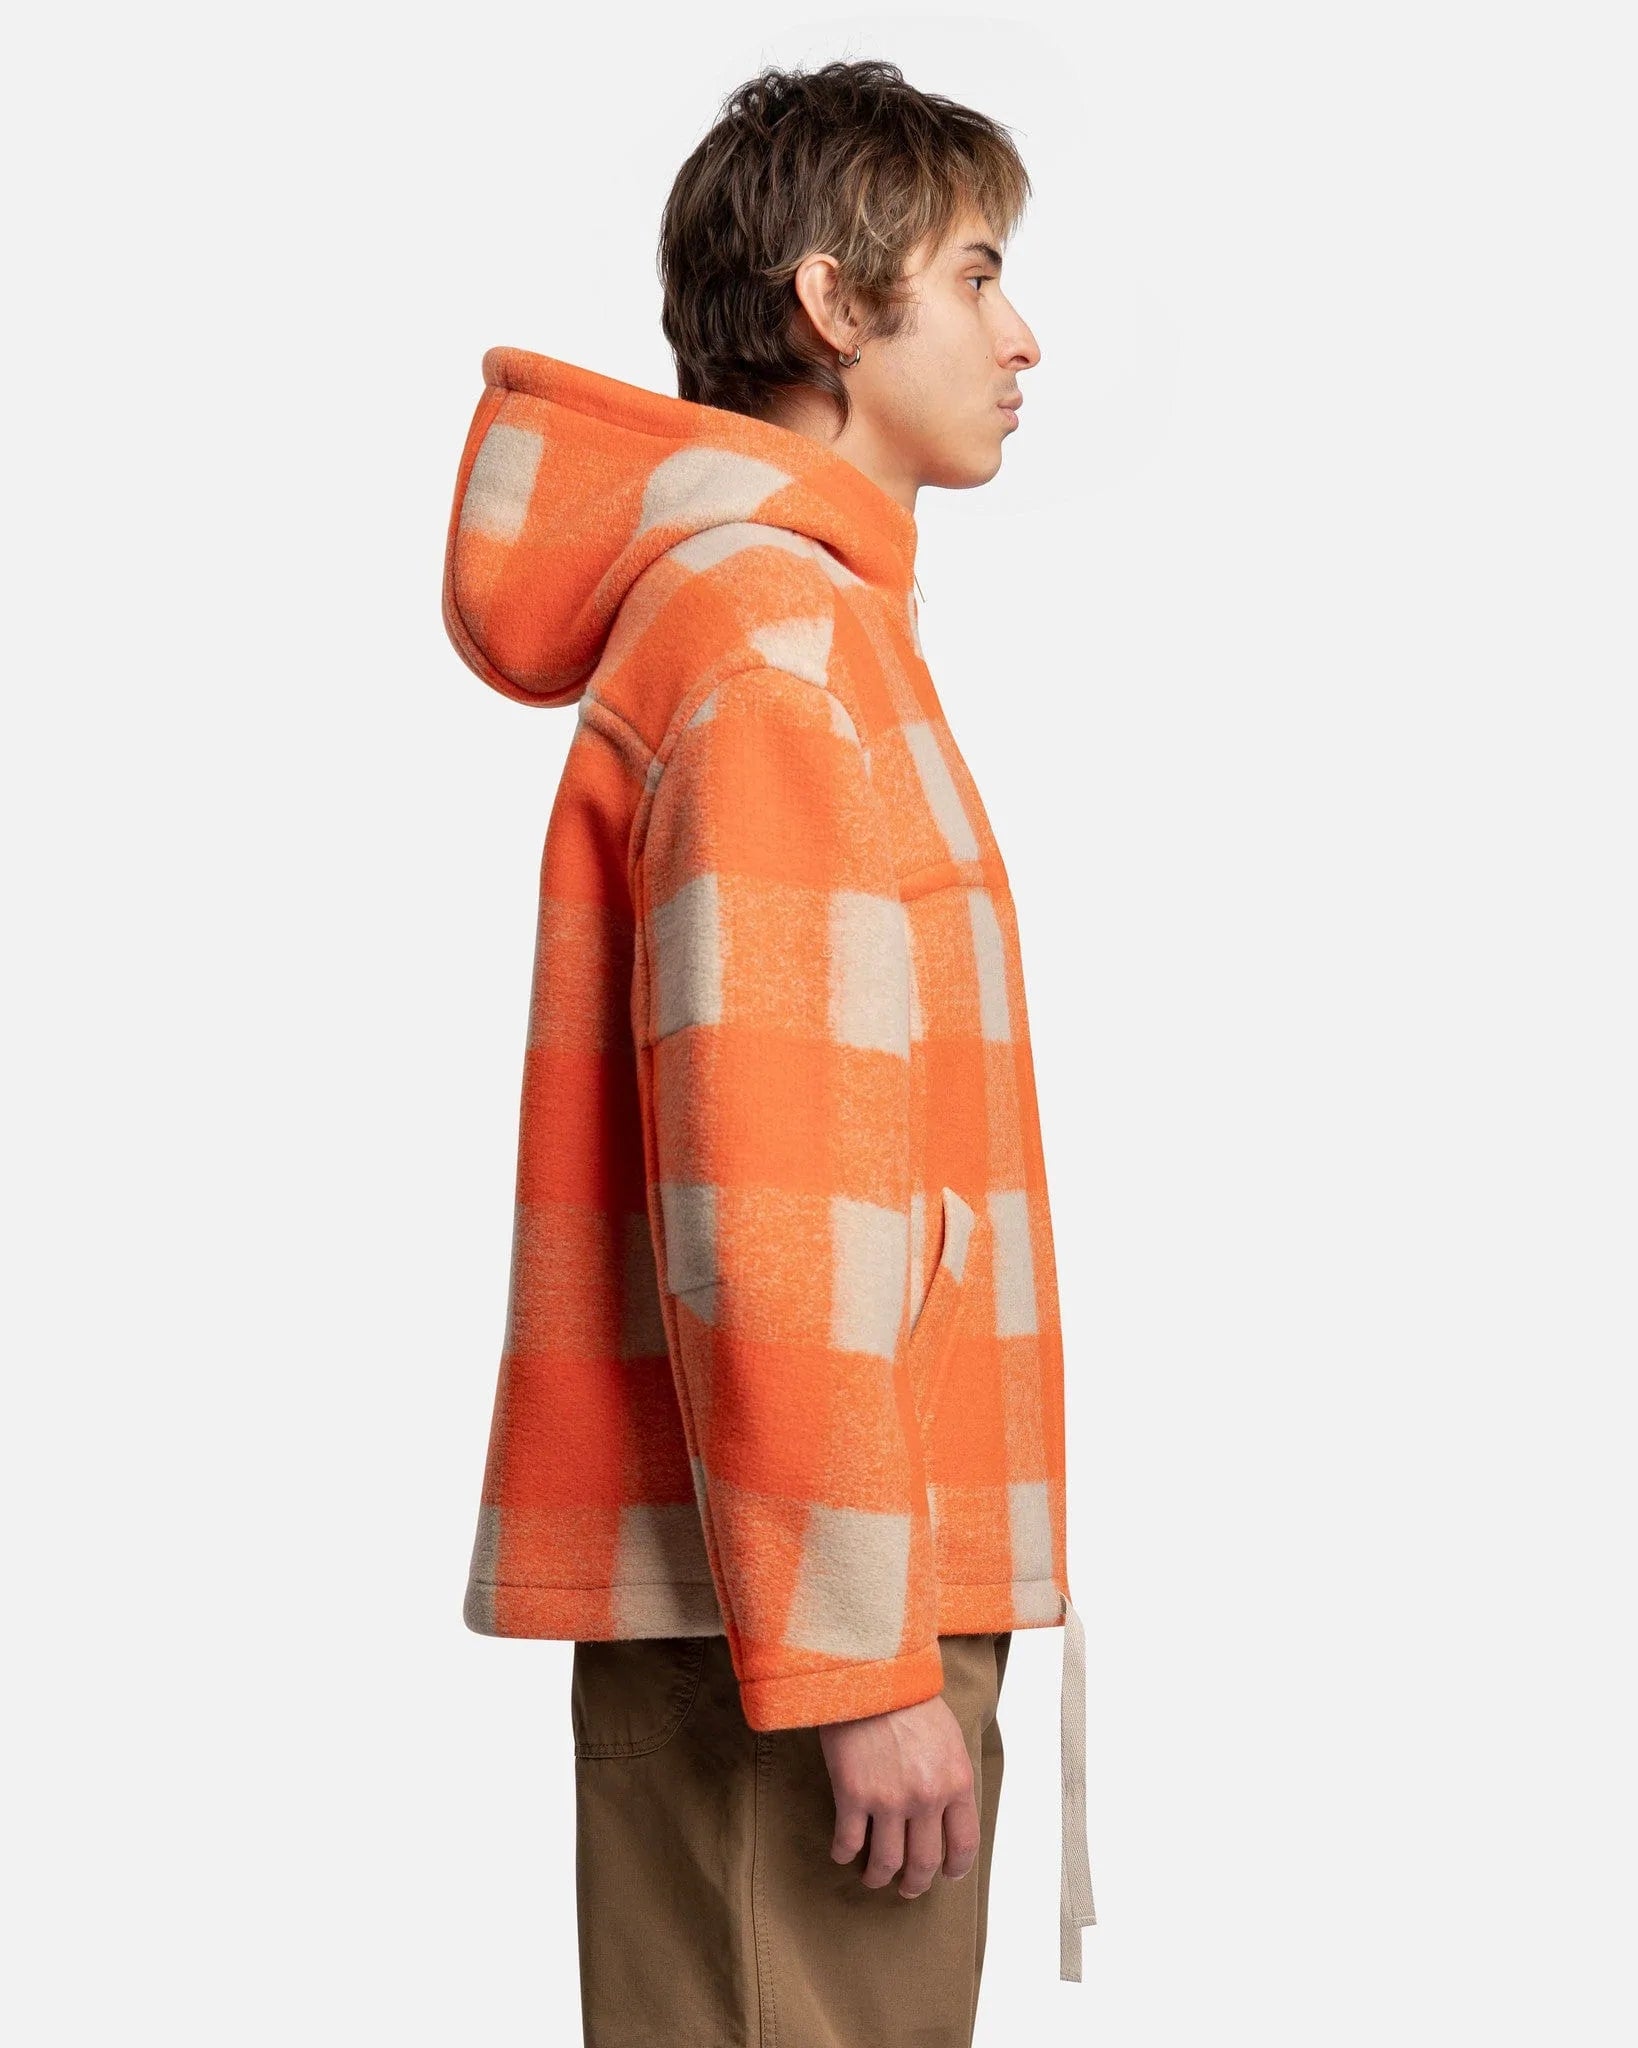 Isabel Marant Homme Men's Jackets Kurt Jacket in Orange